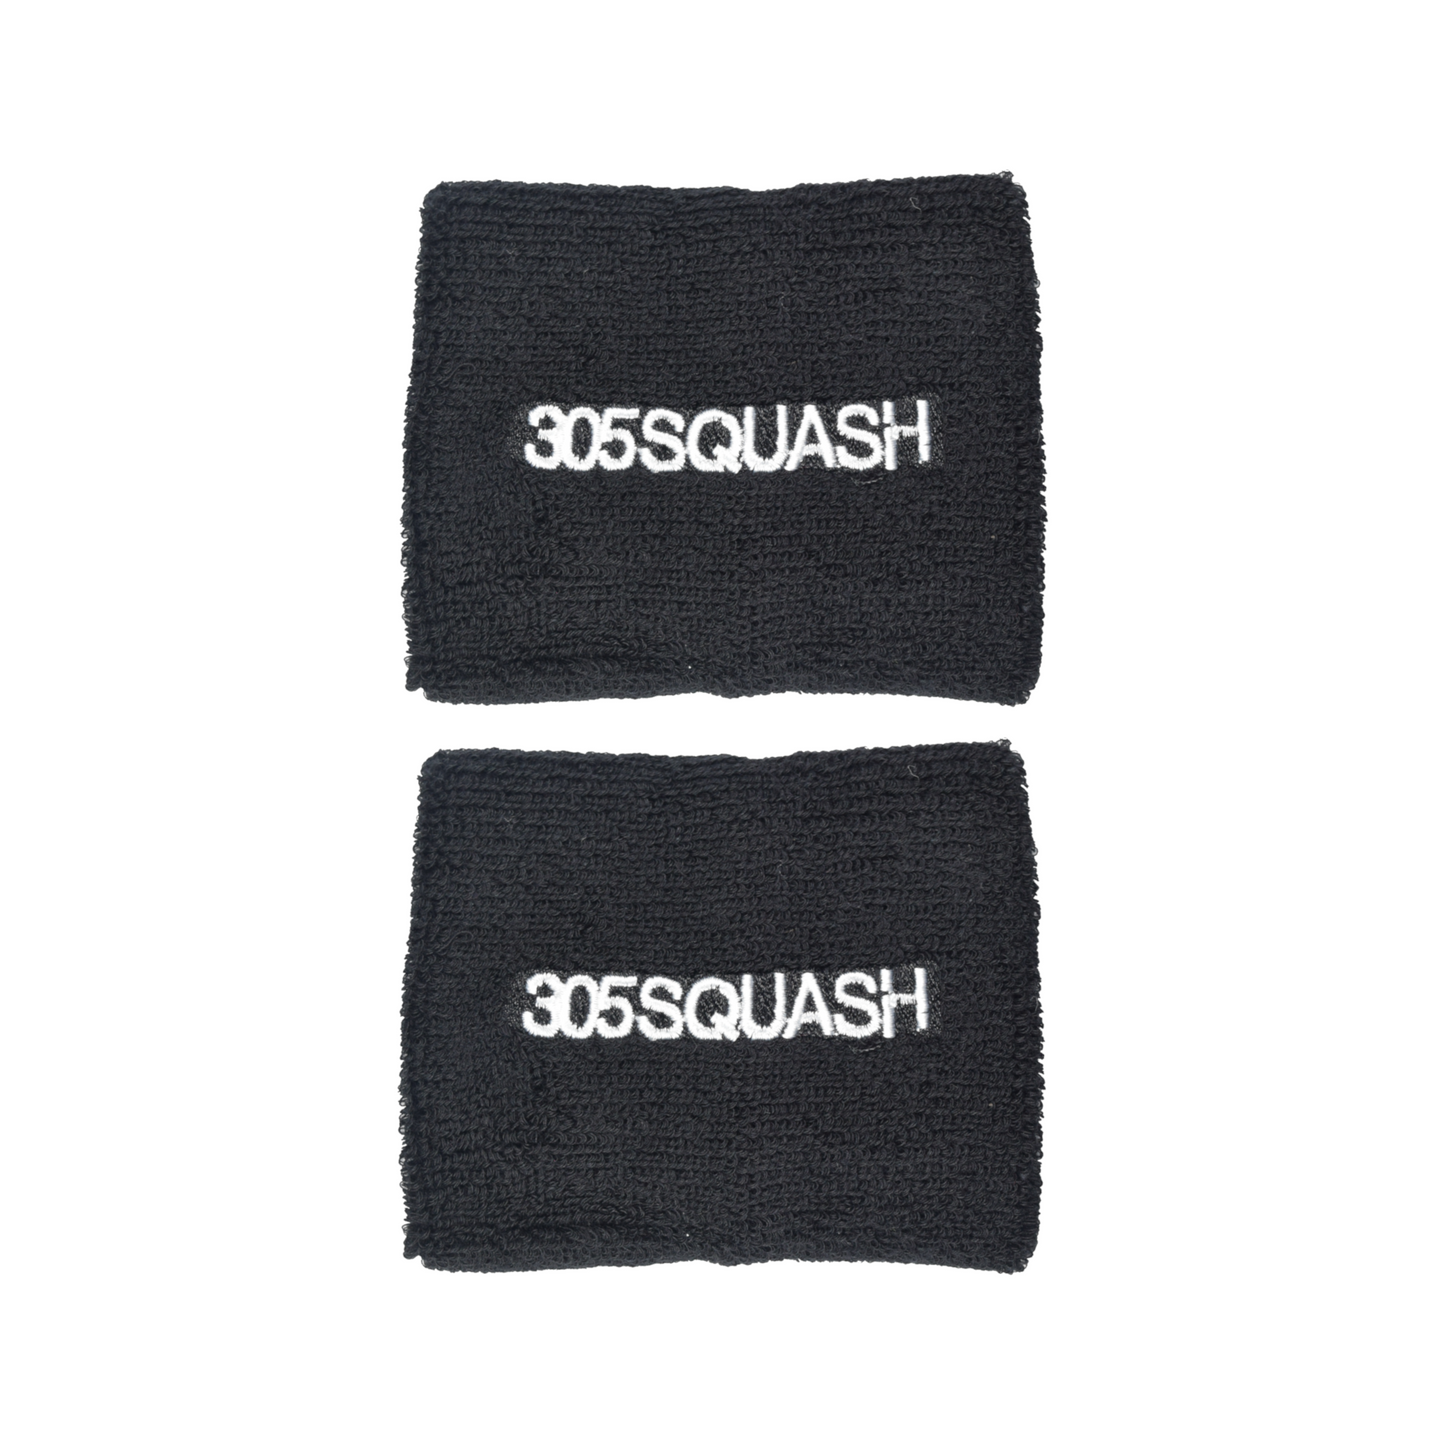 305SQUASH Large Sweatbands - Twin Pack